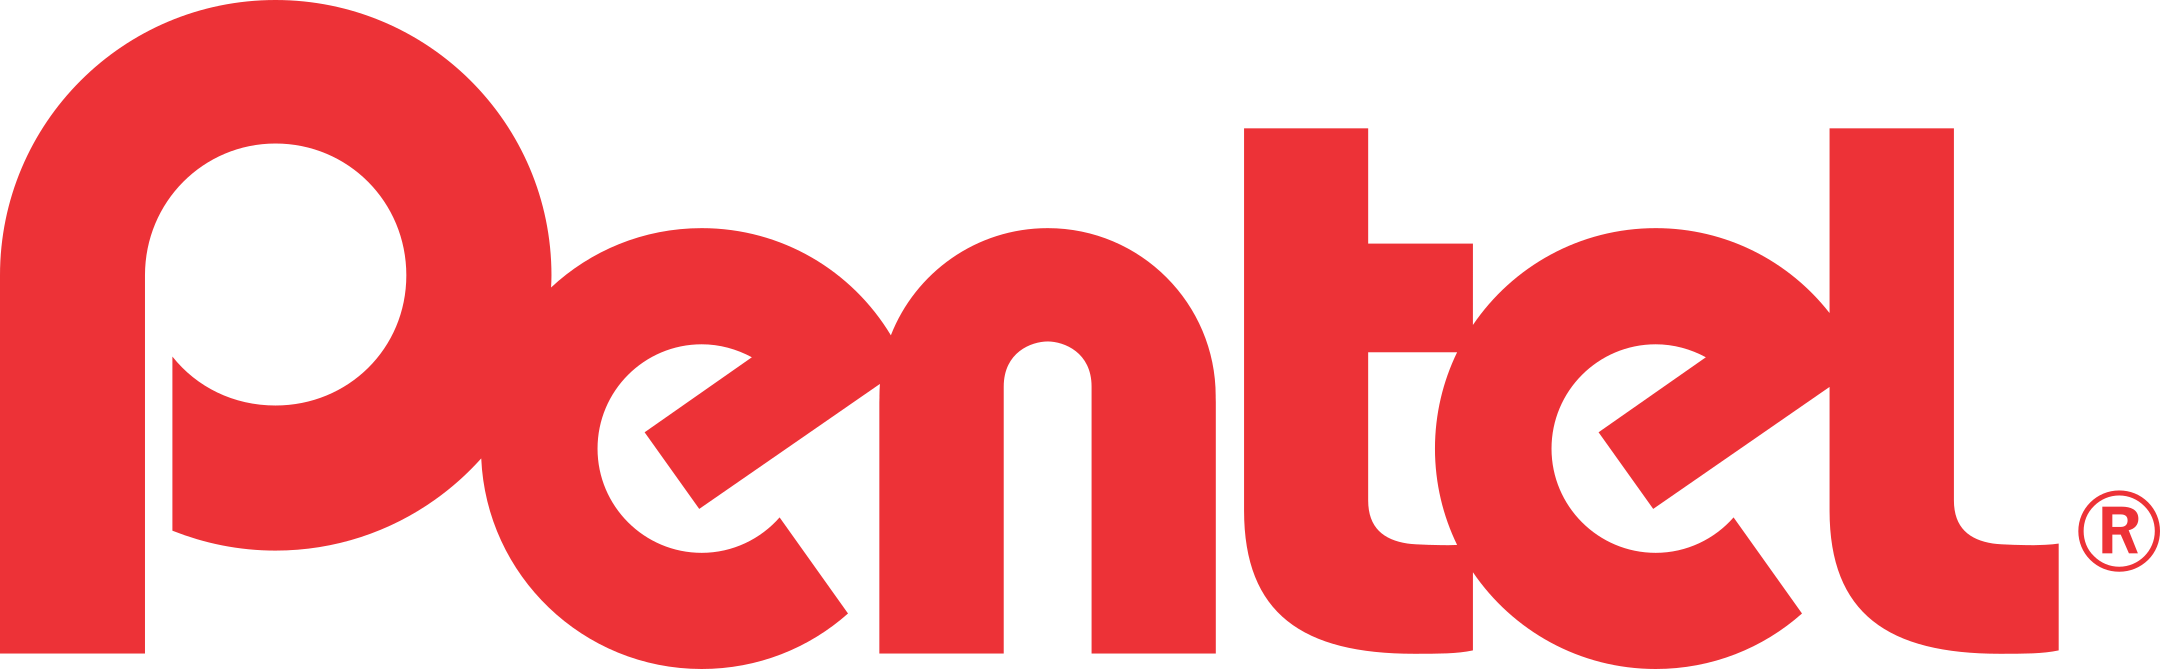 pentel logo 1 - Pentel Logo